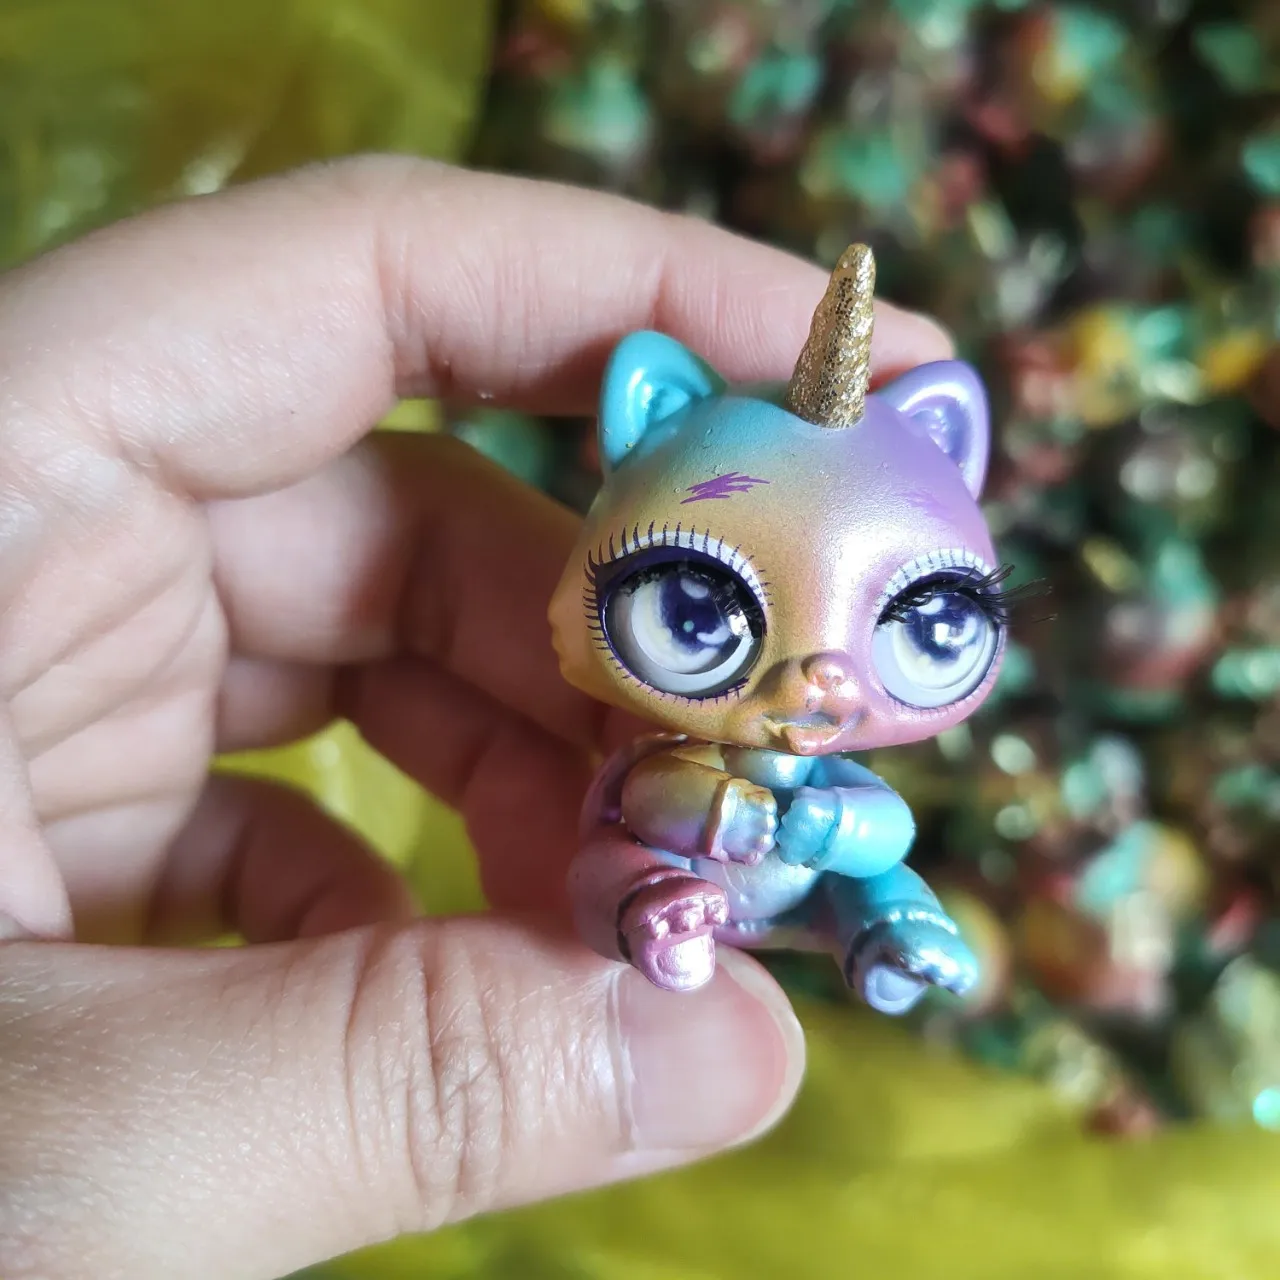 

surprise kawaii poopsie cutie tooties cute Slime rainbow unicorn crystal clay figurines doll gift for girl children baby toys